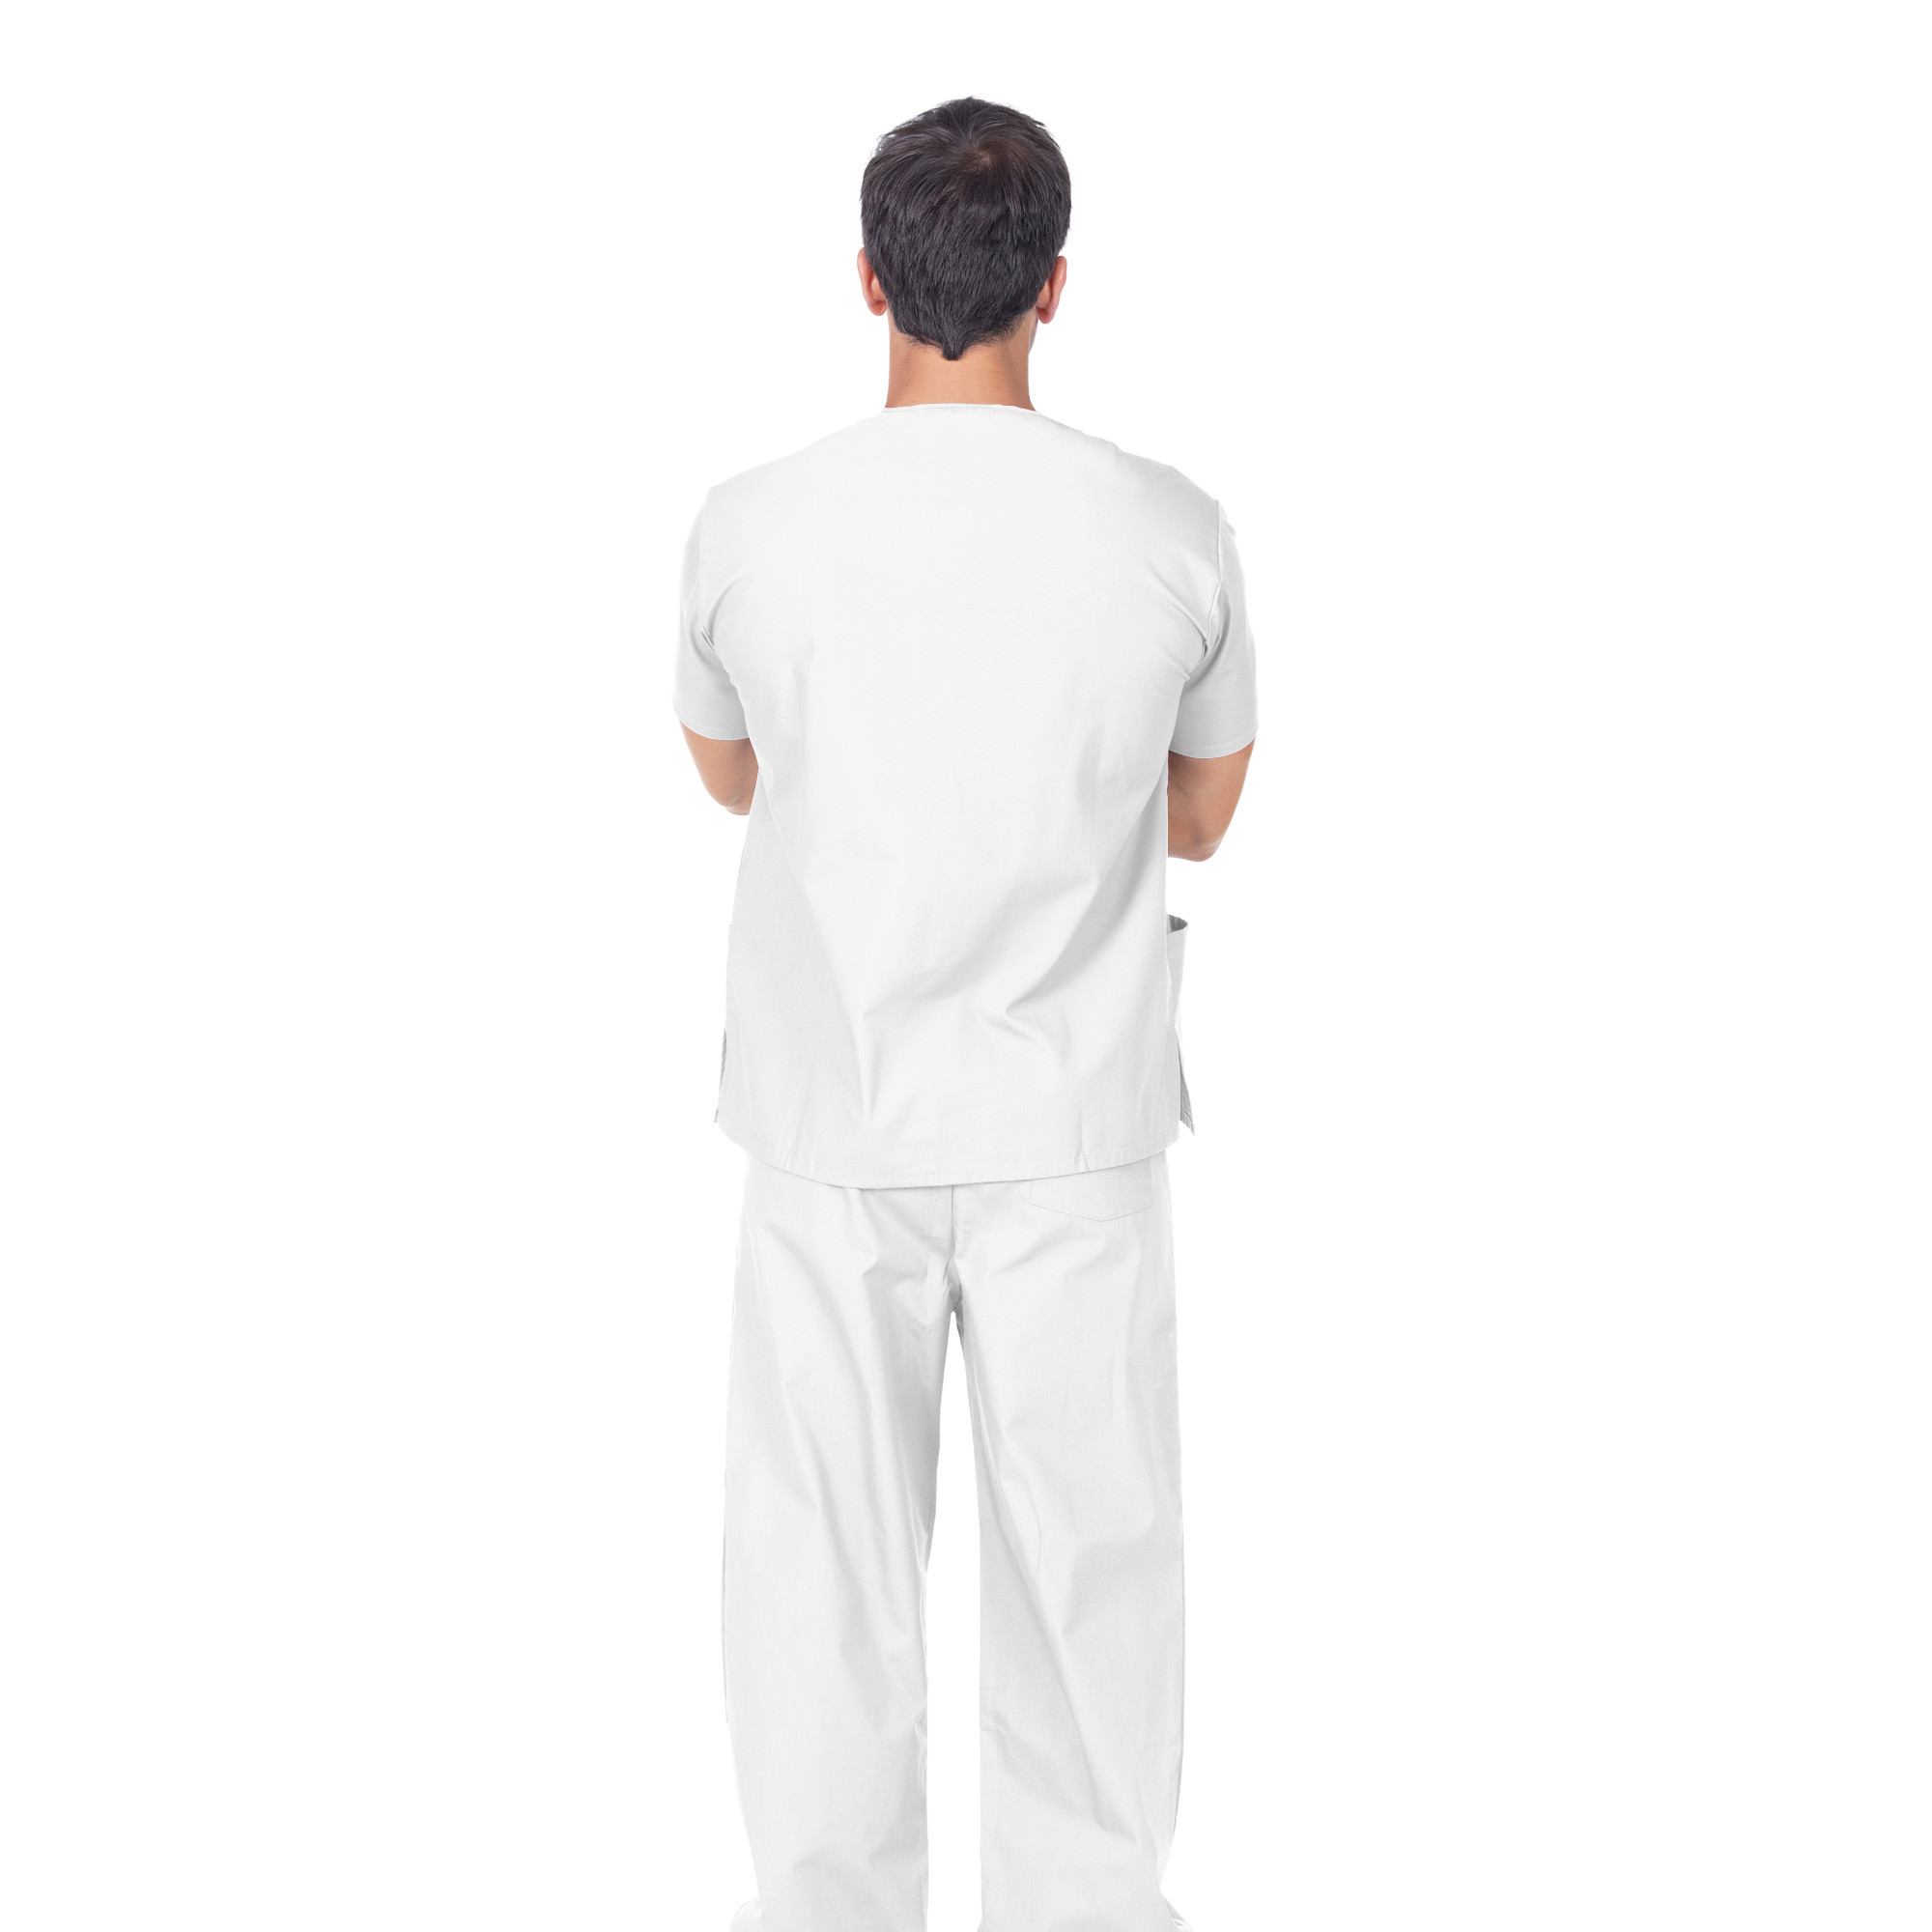 Pantaloni professionali in cotone bianco Unisex taglia Extra Large